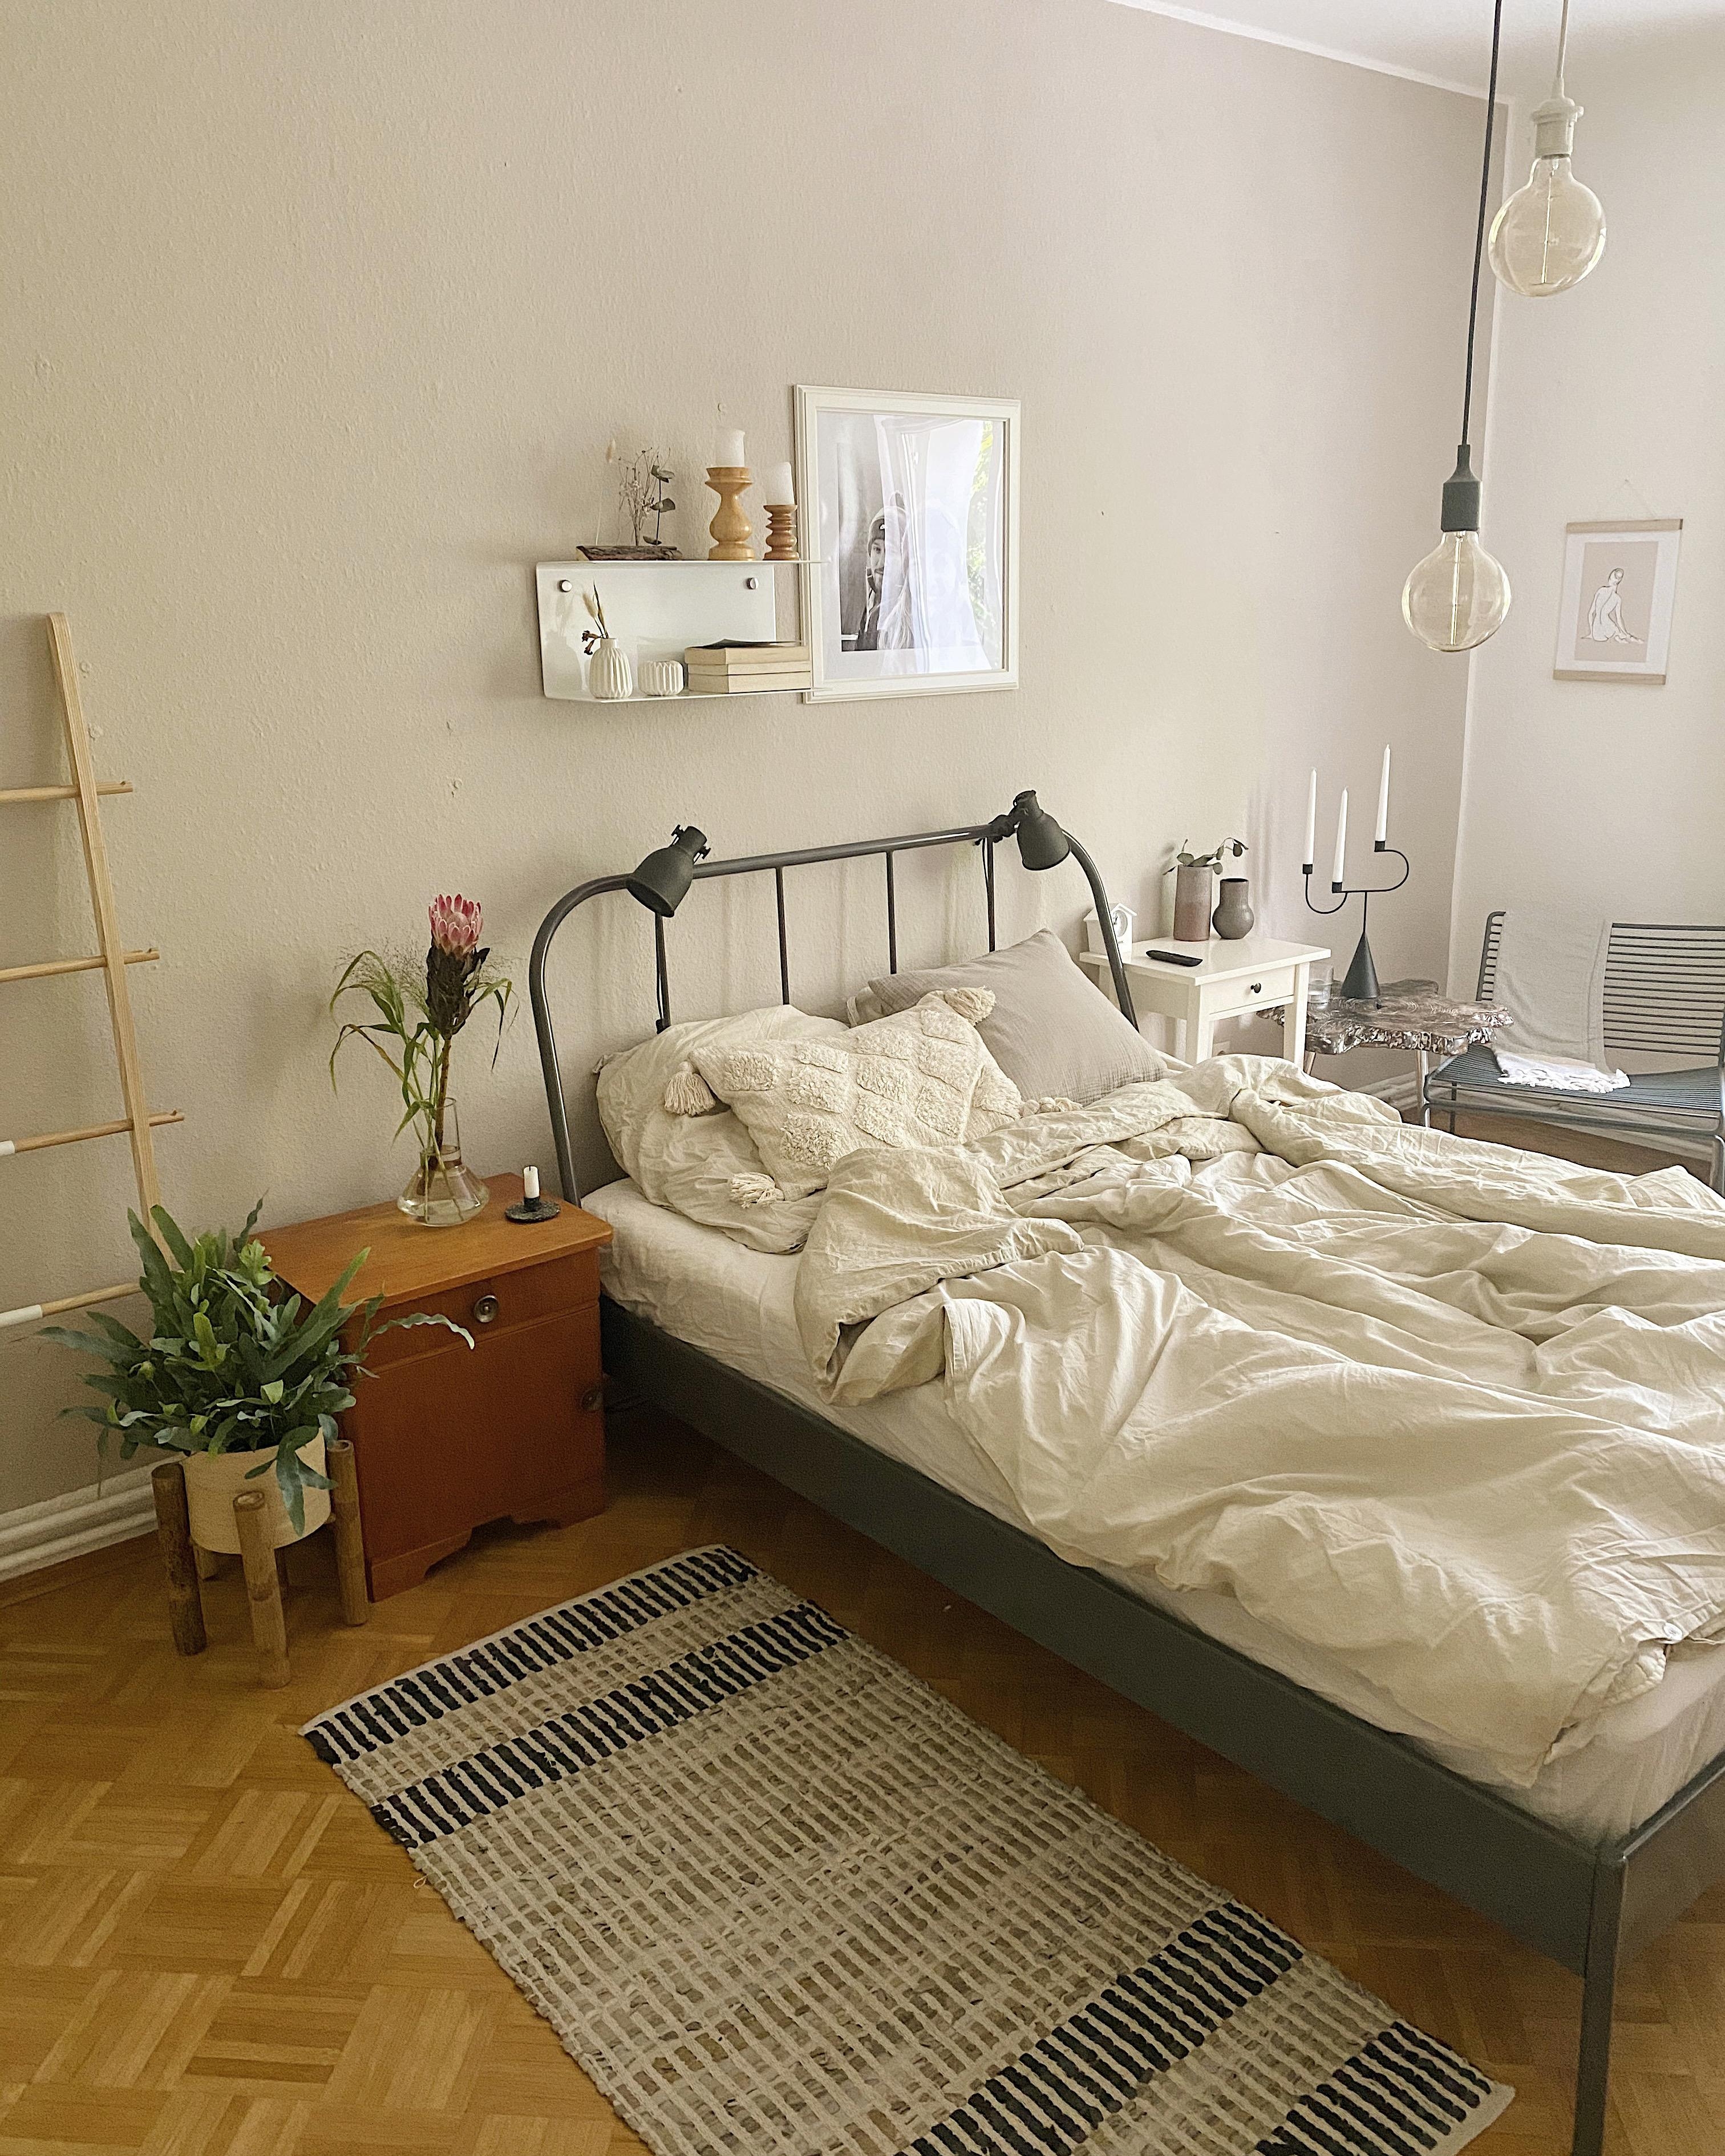 Cozy bedroom vibes✨ #bedroom #bedroominspo #mybedroom #naturalliving #wandfarbe #cozyhome